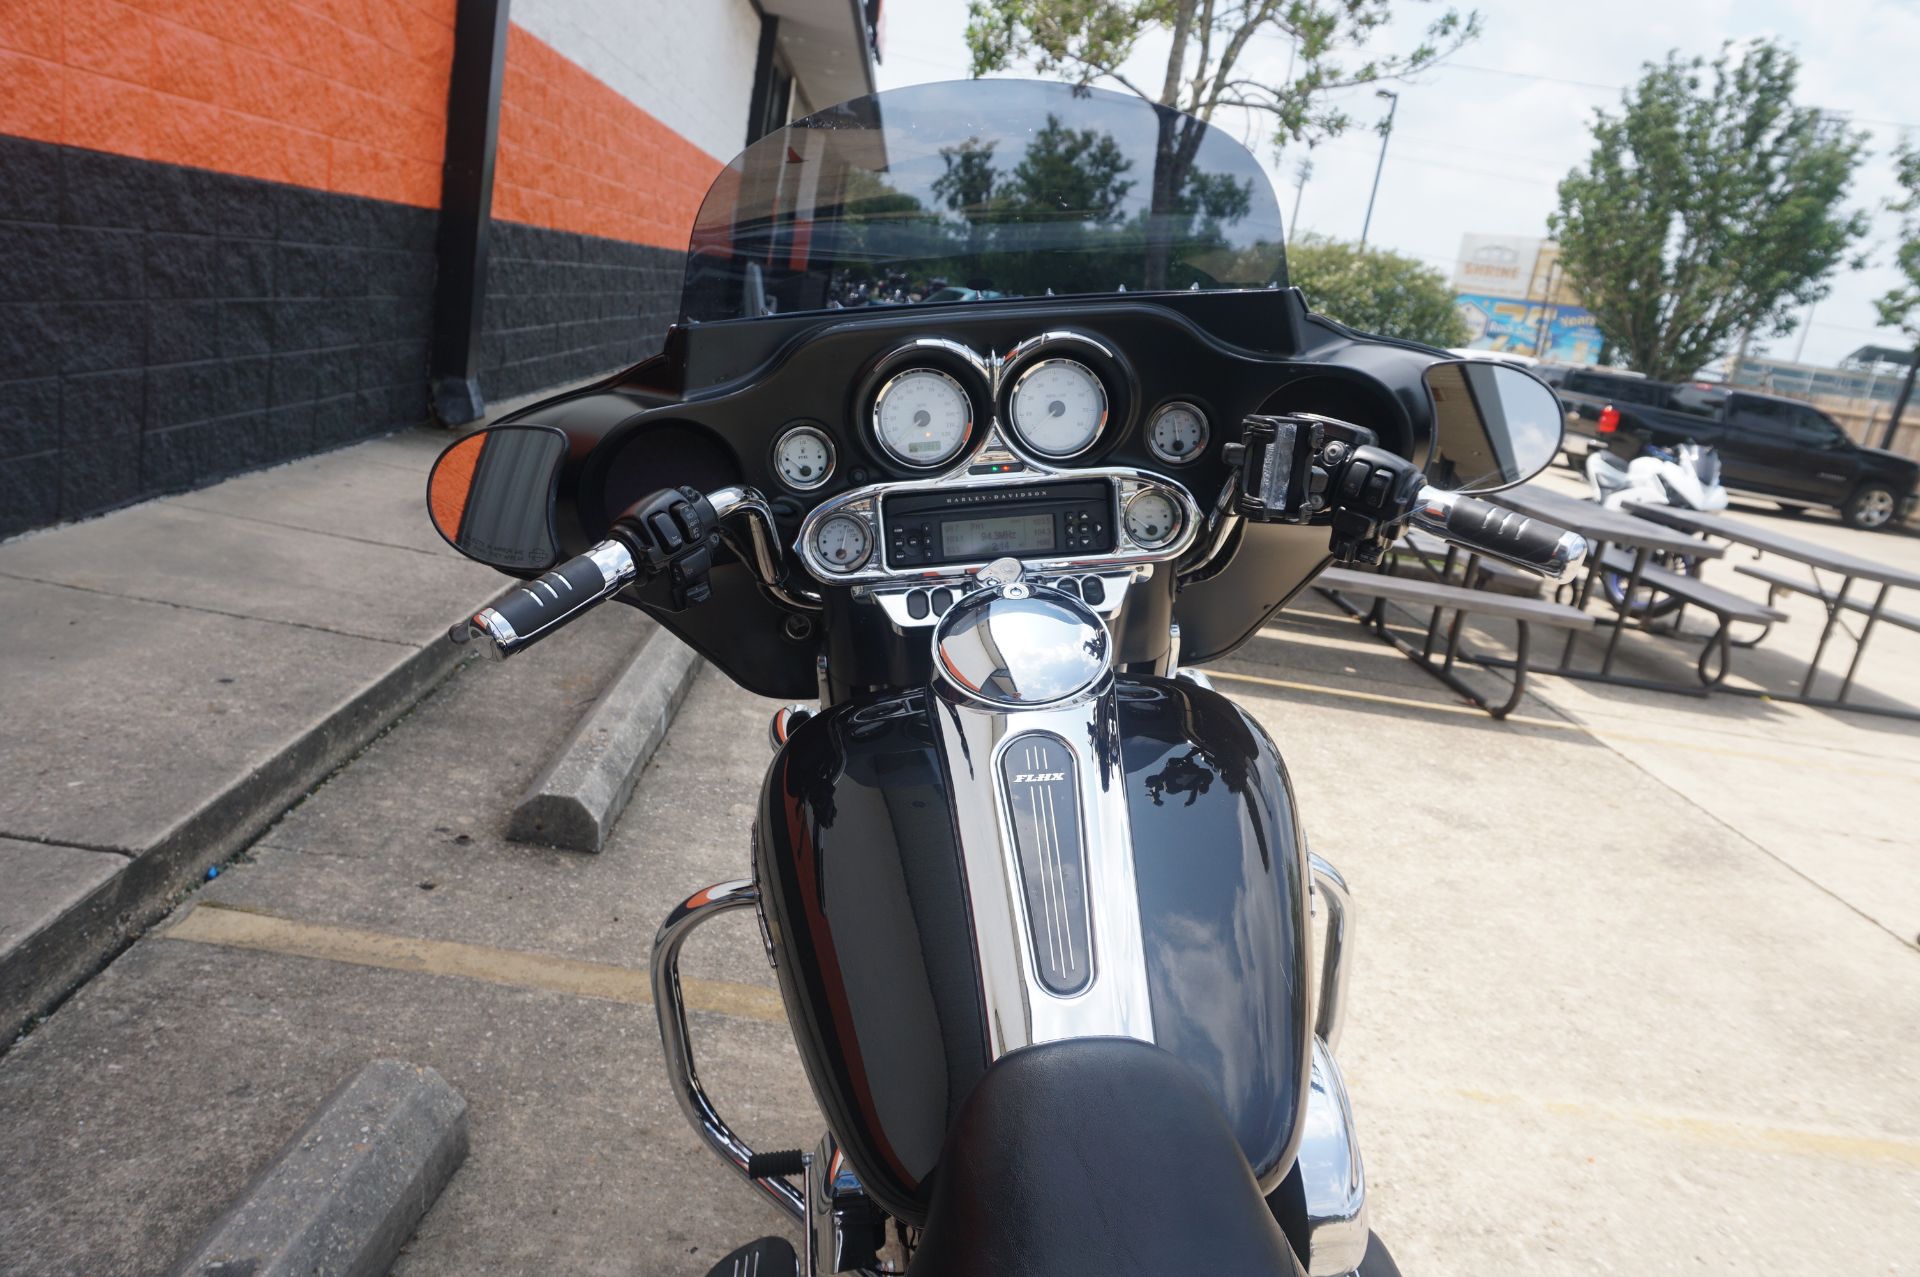 2013 Harley-Davidson Street Glide® in Metairie, Louisiana - Photo 13